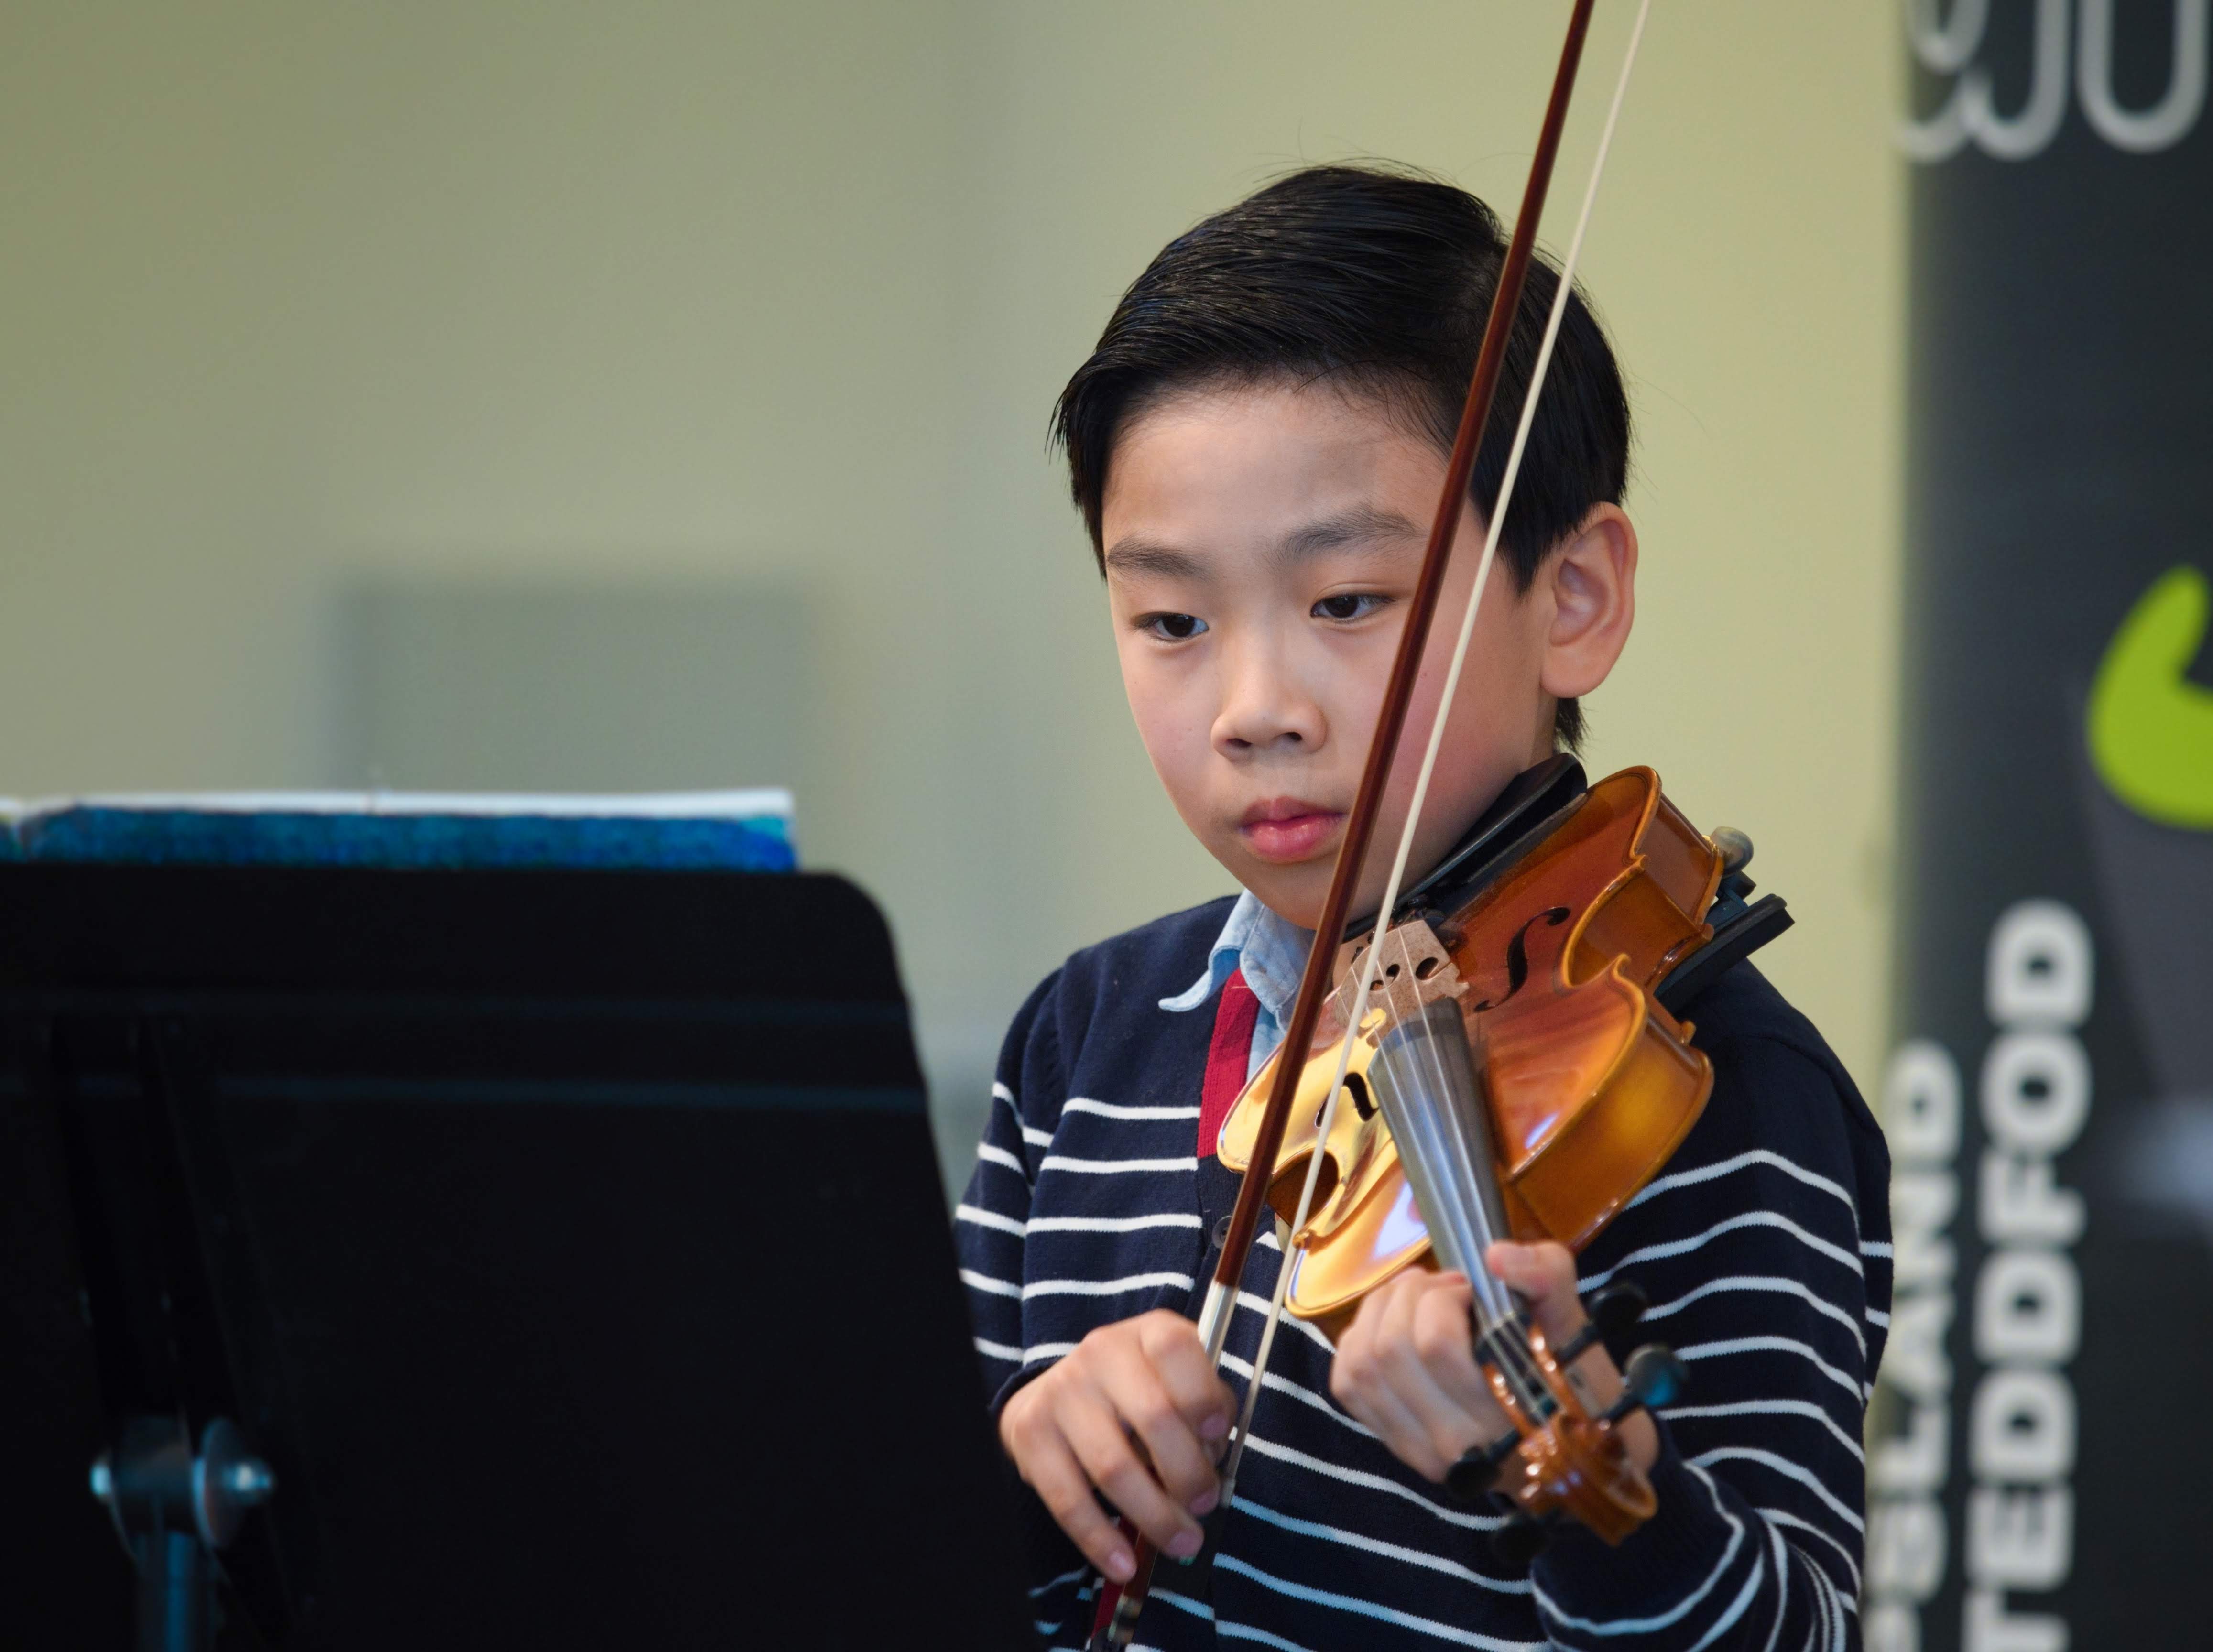 WGE Instrumental Xavier Chew Displays His Skill on the Violin